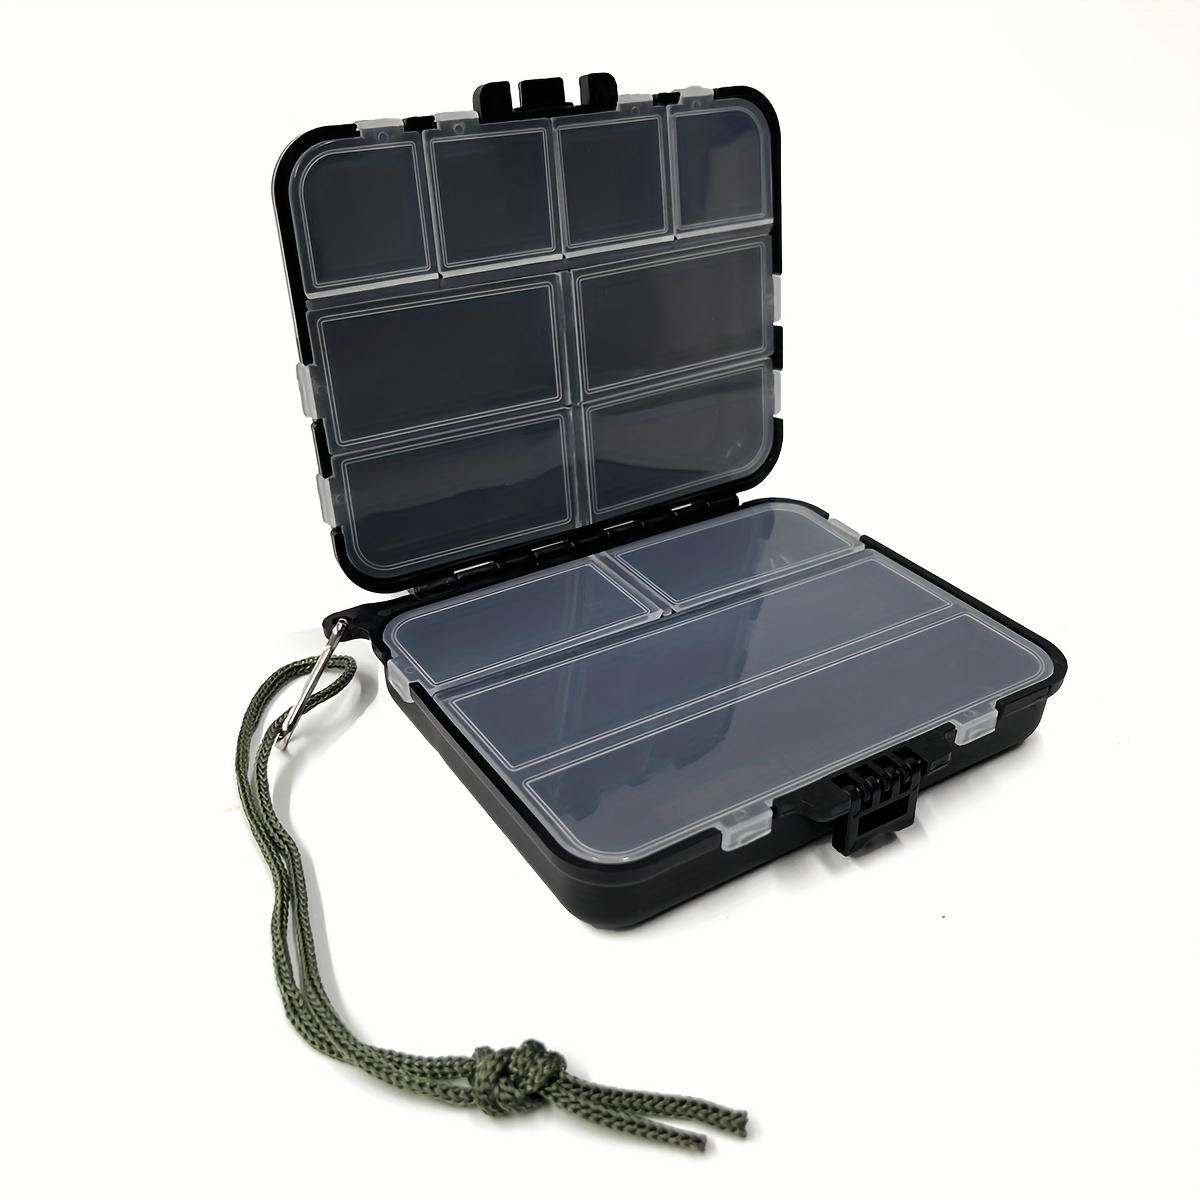 Fishing Tackle Box - Hard Plastic Gear Organizer Case with Flip